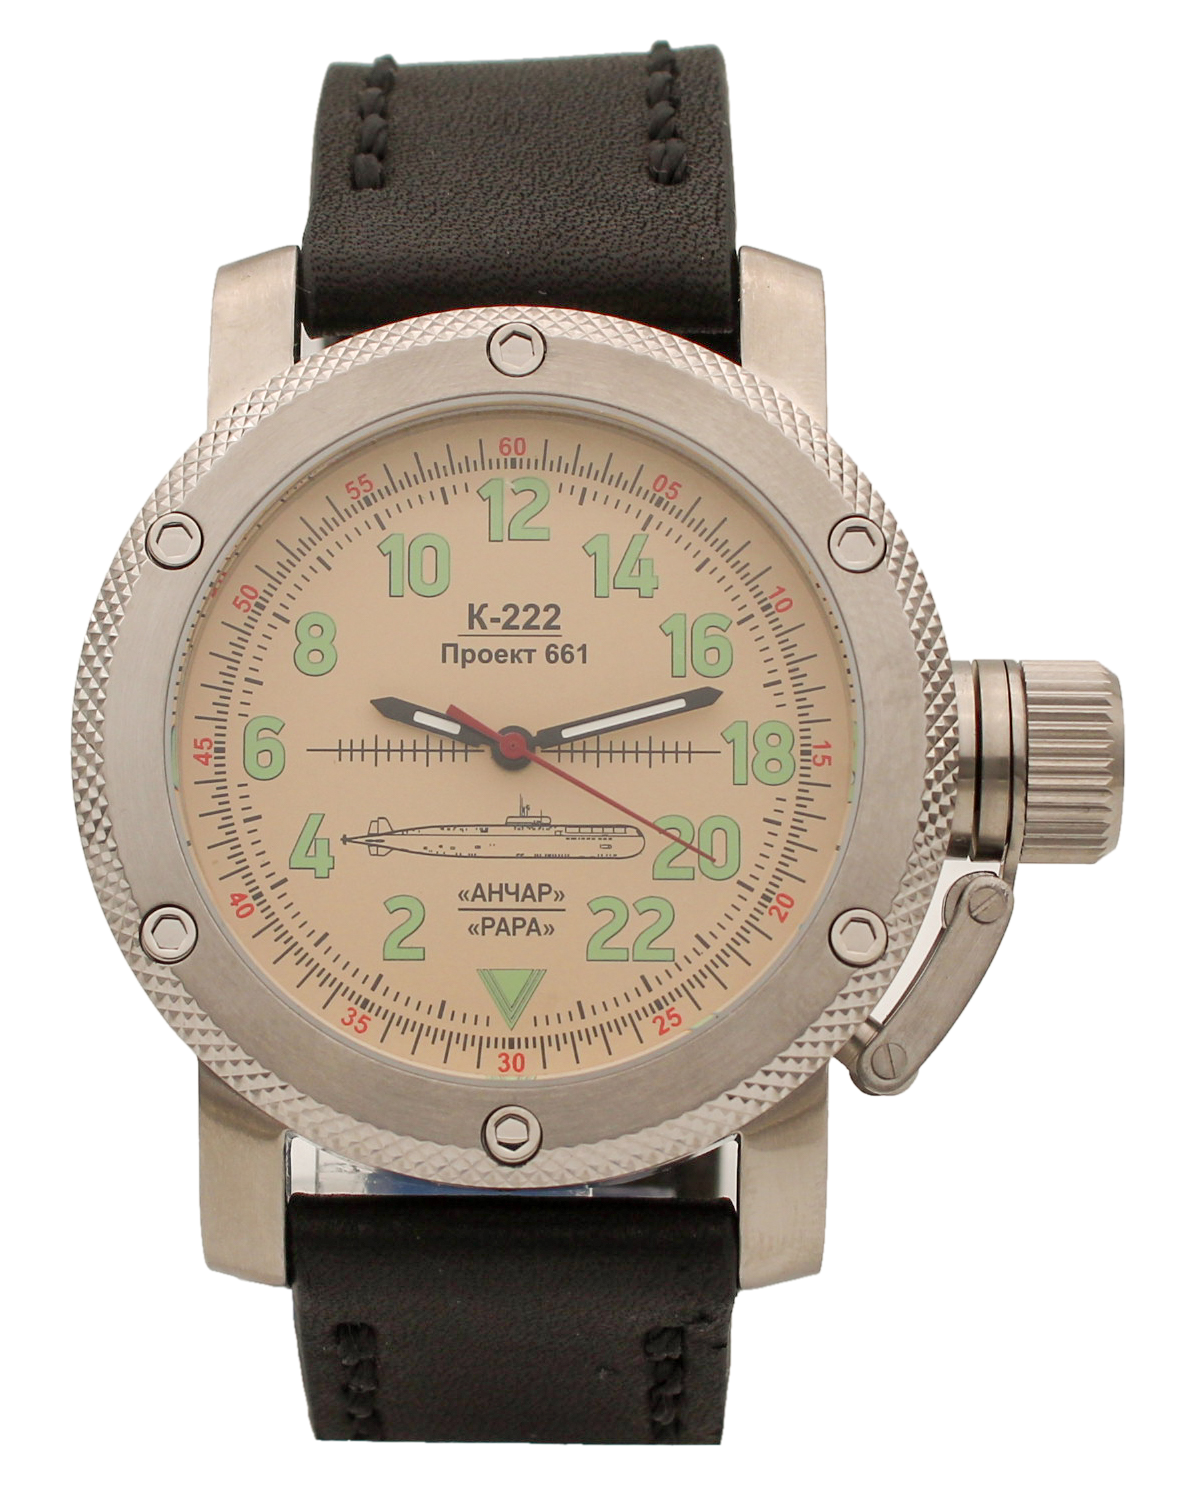 Наручные часы мужские Watch Triumph К-222 / Анчар (Papa)